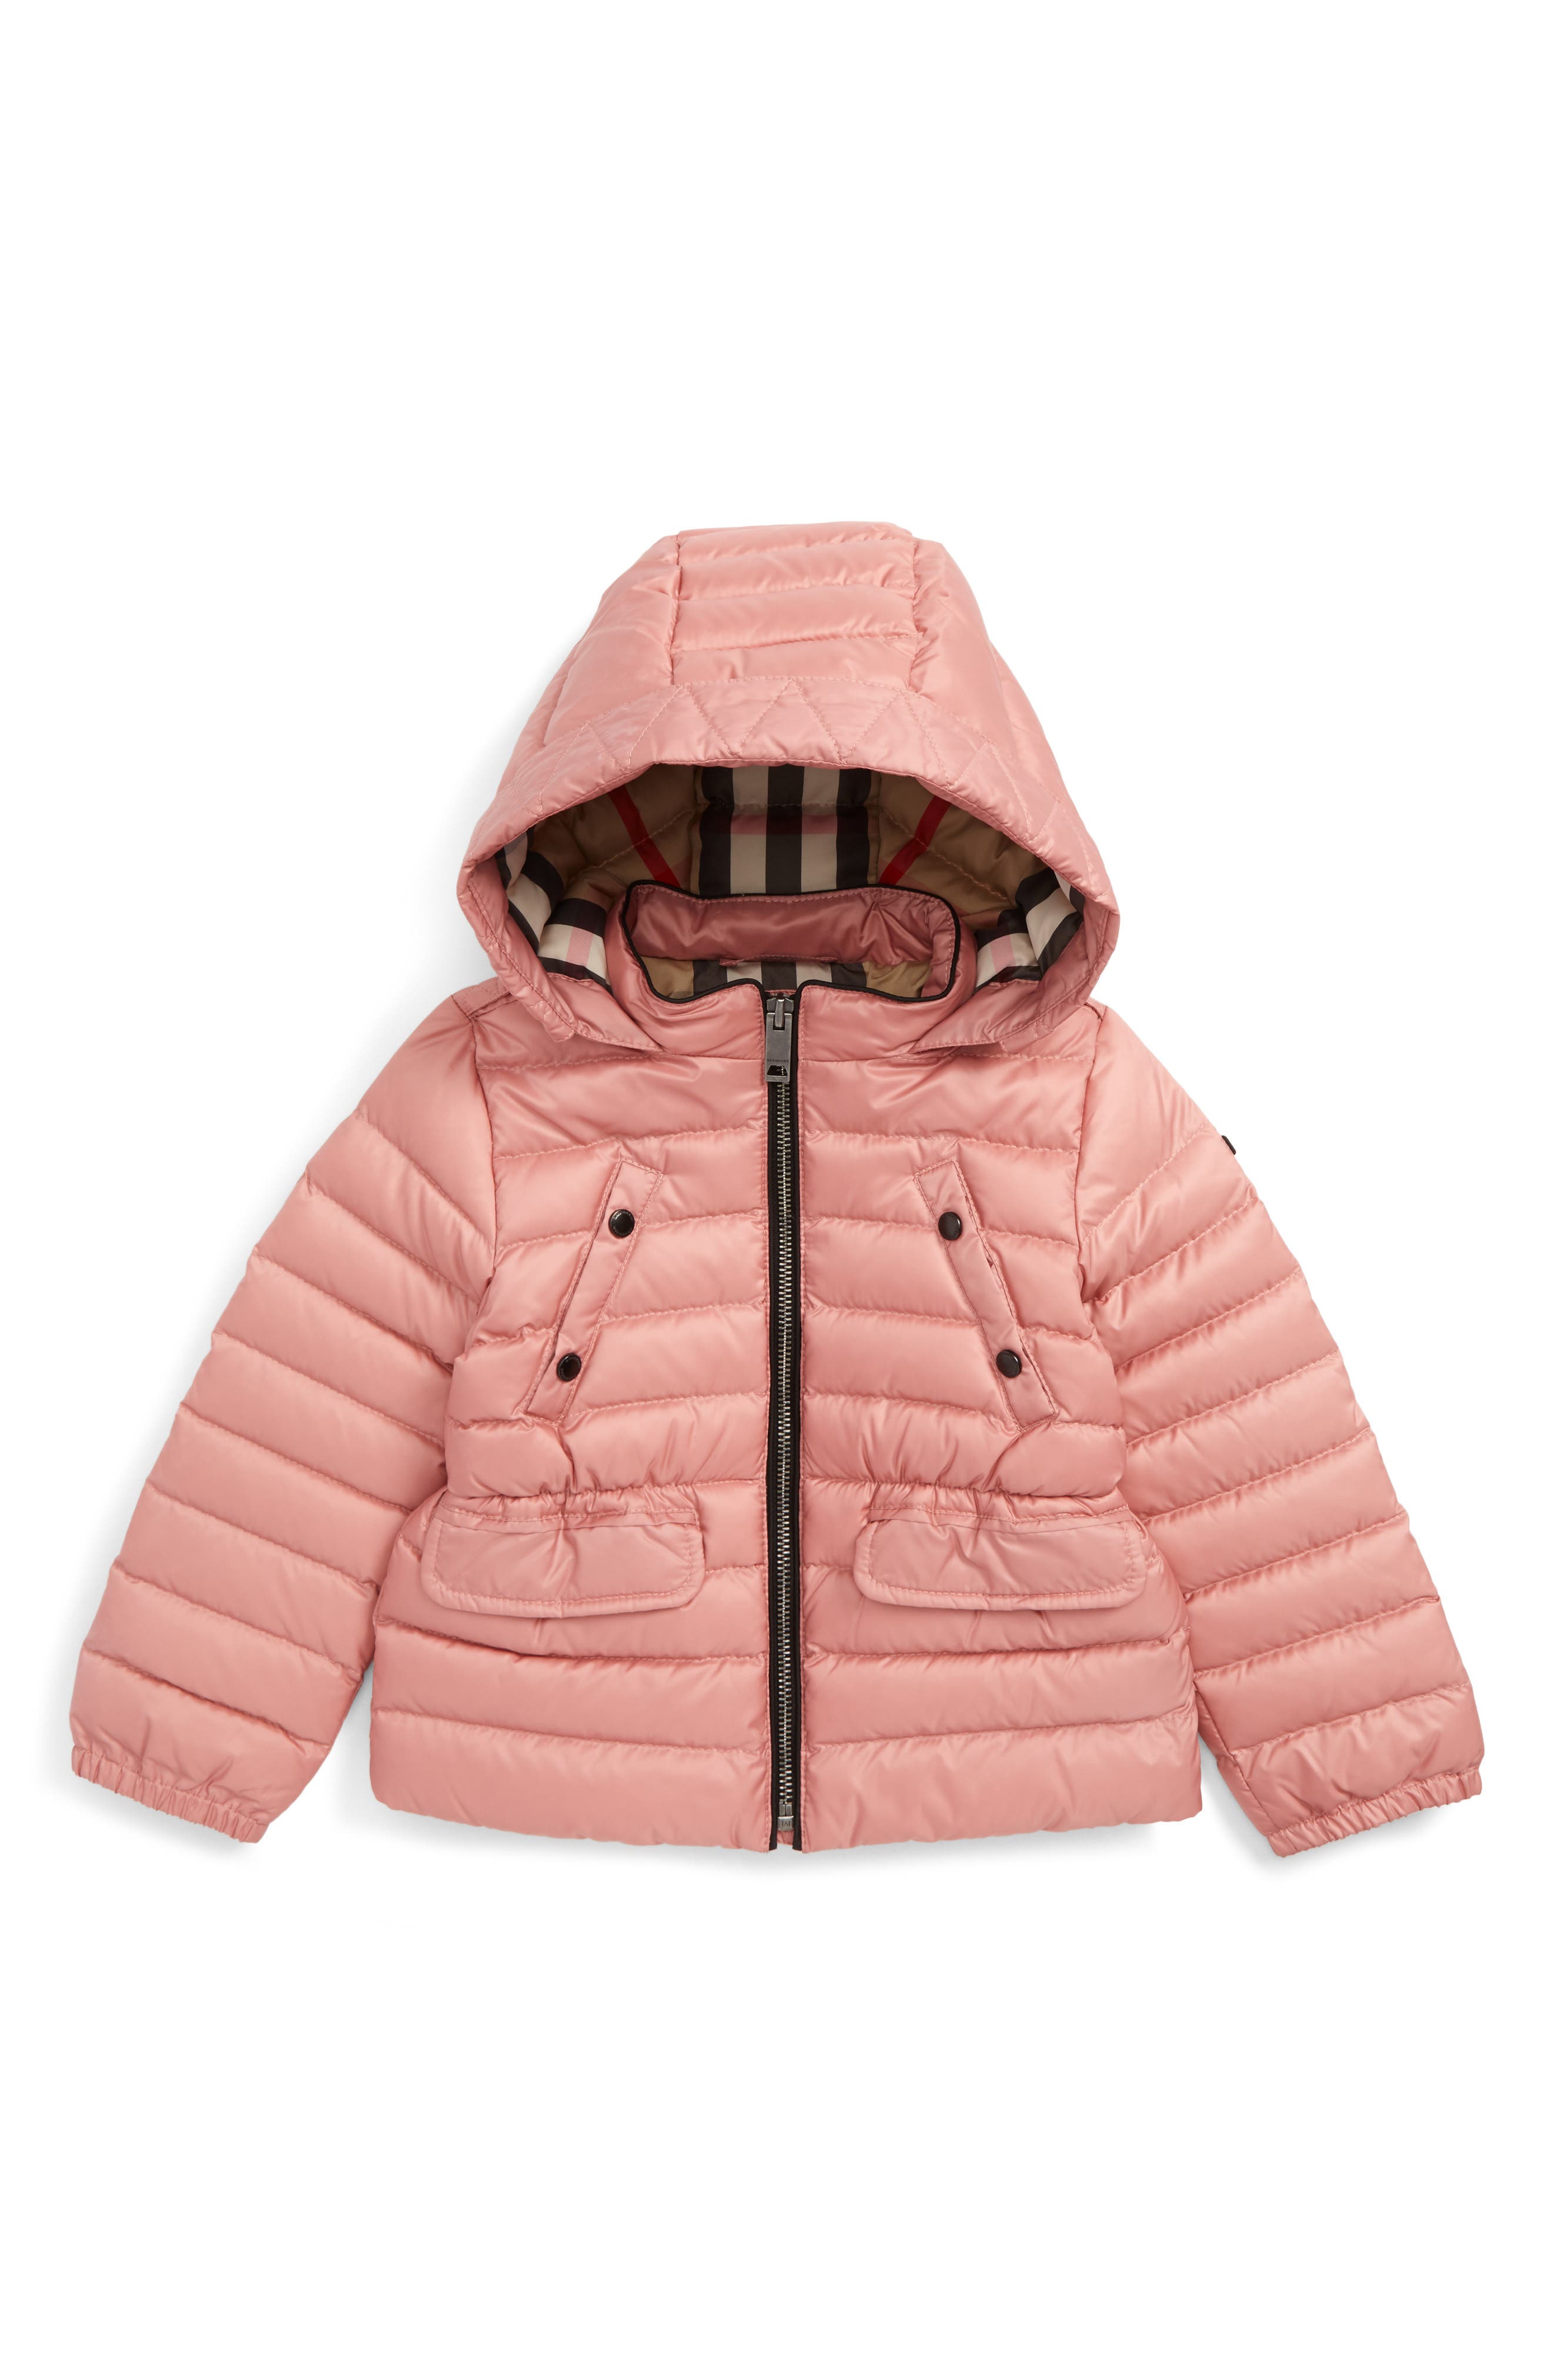 burberry toddler girl jacket